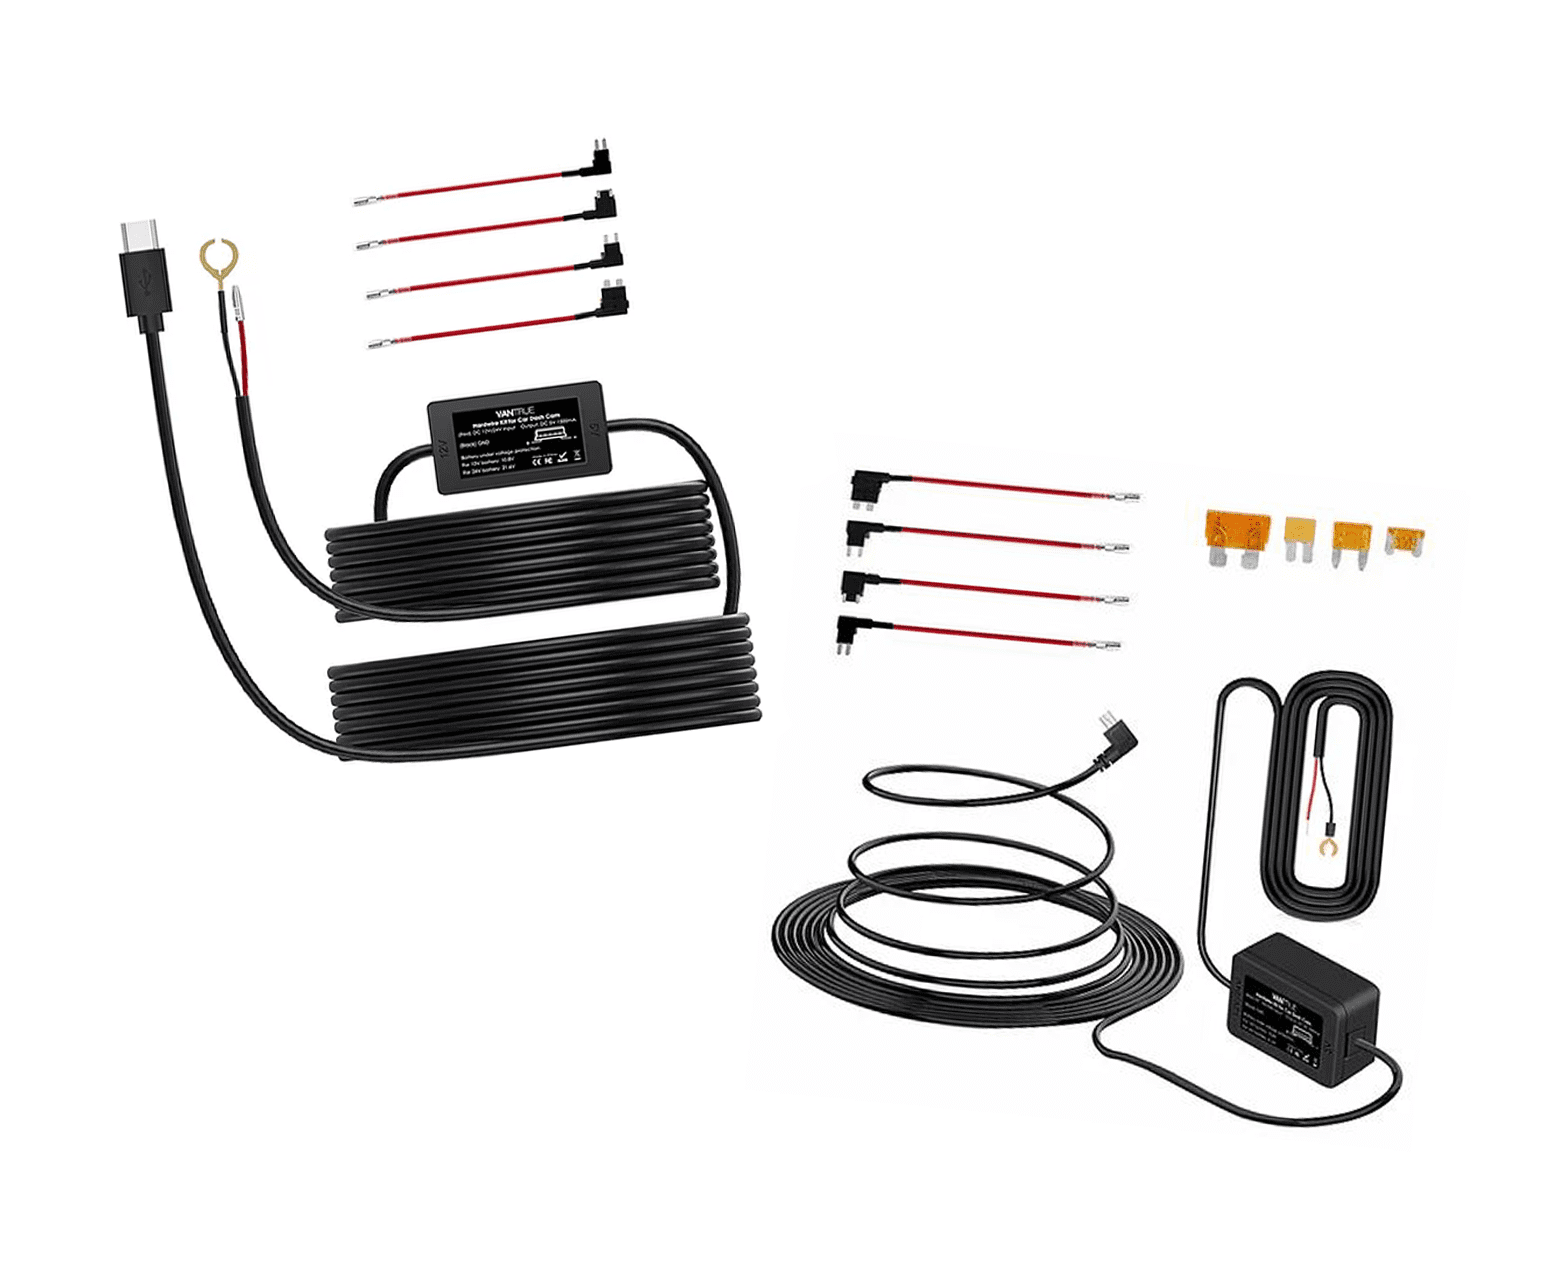 Vantrue Hardwire Kit (Power Cable)